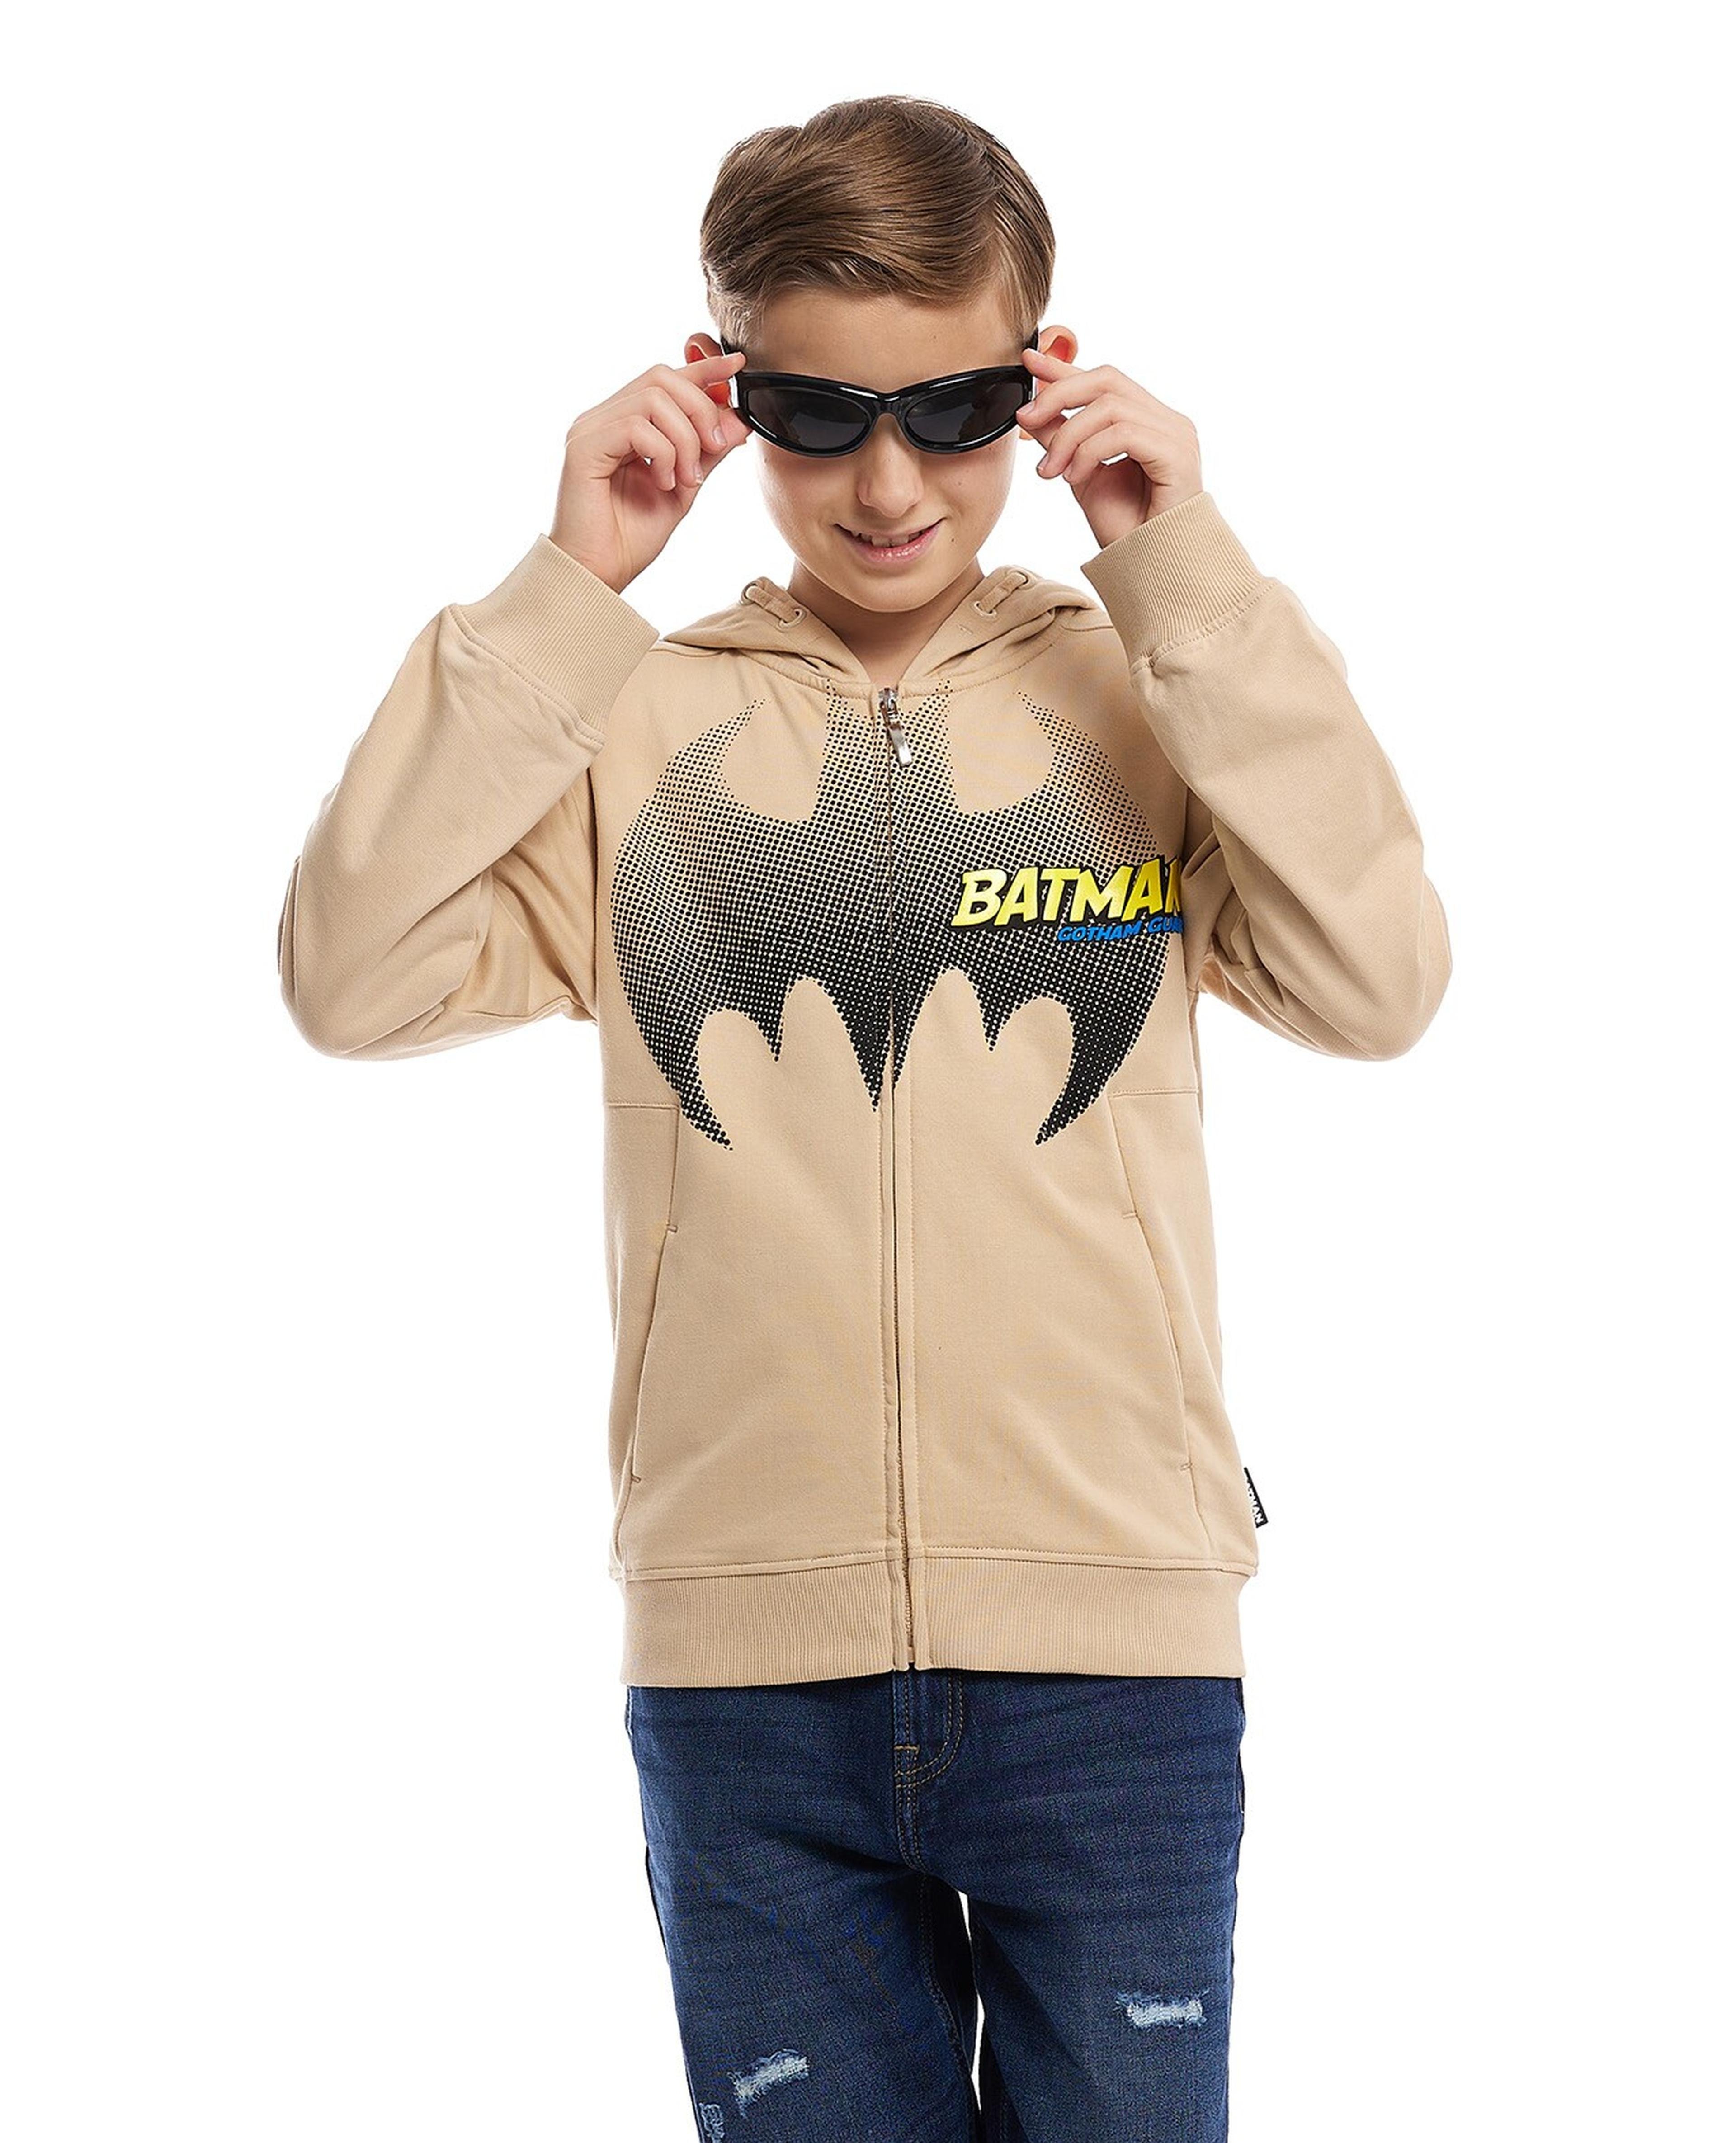 Batman Print Hooded Jacket with Zipper Closure